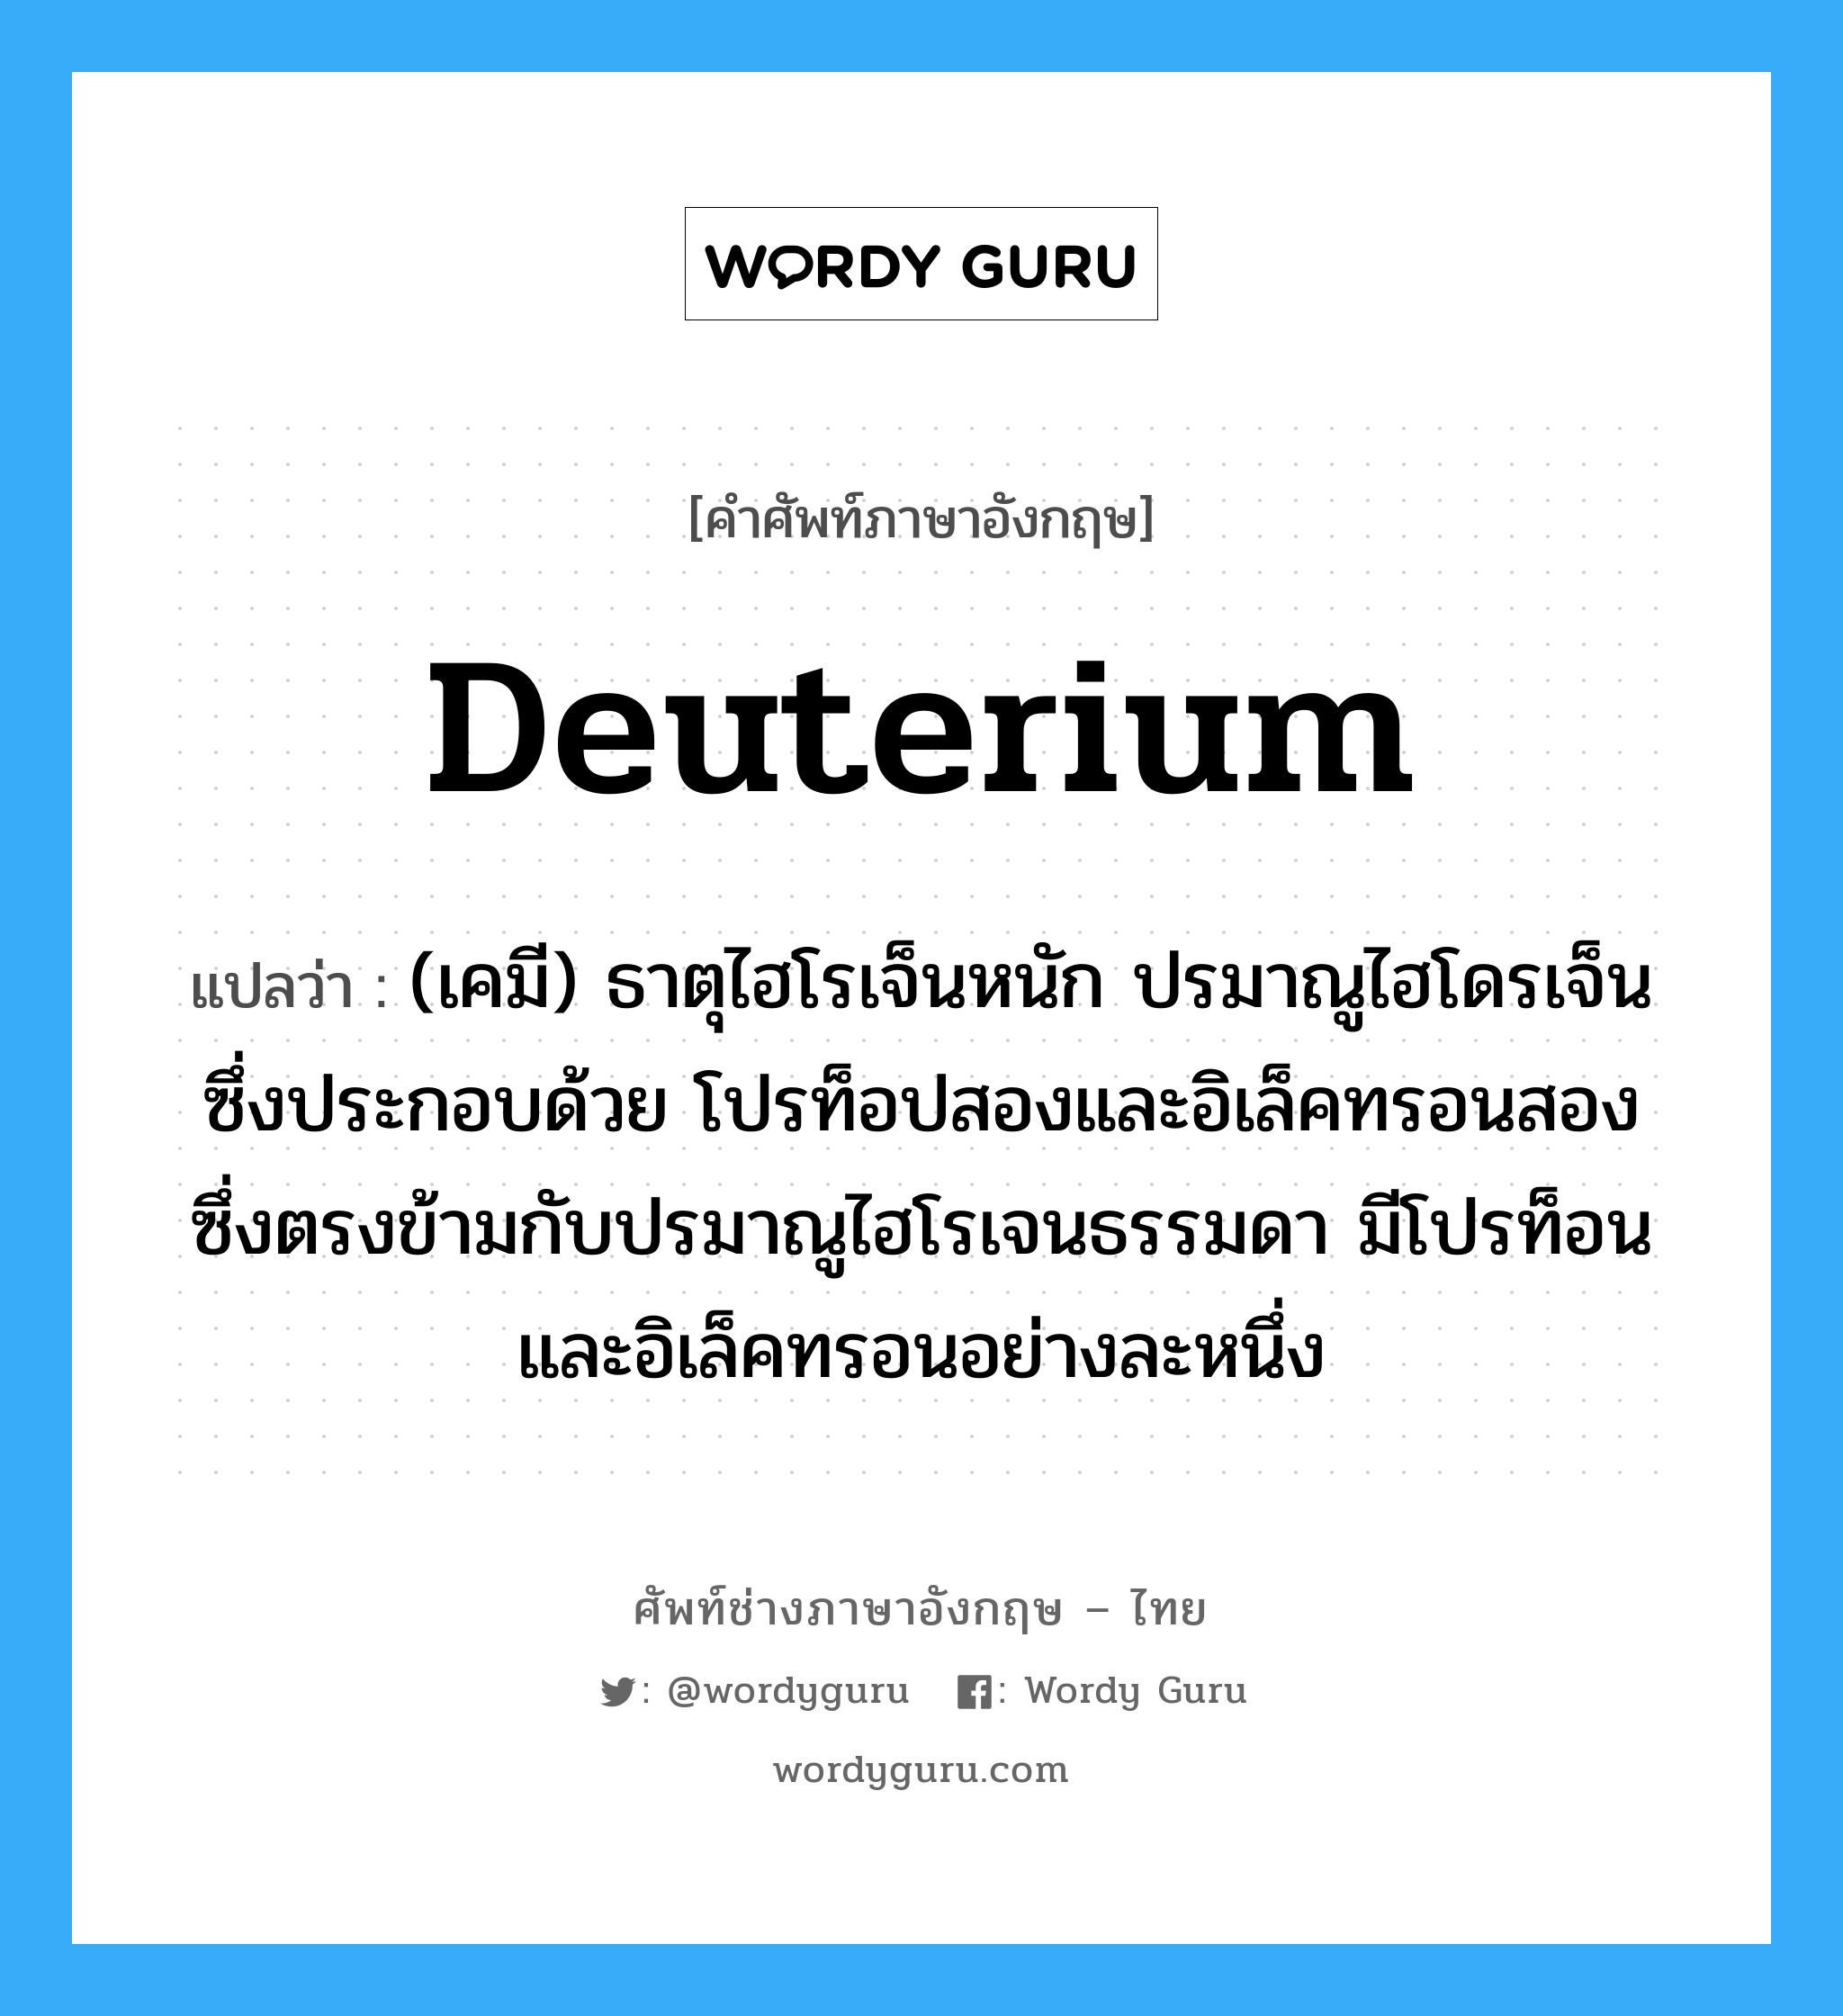 deuterium แปลว่า?, คำศัพท์ช่างภาษาอังกฤษ - ไทย deuterium คำศัพท์ภาษาอังกฤษ deuterium แปลว่า (เคมี) ธาตุไฮโรเจ็นหนัก ปรมาณูไฮโดรเจ็นซึ่งประกอบด้วย โปรท็อปสองและอิเล็คทรอนสอง ซึ่งตรงข้ามกับปรมาณูไฮโรเจนธรรมดา มีโปรท็อนและอิเล็คทรอนอย่างละหนึ่ง